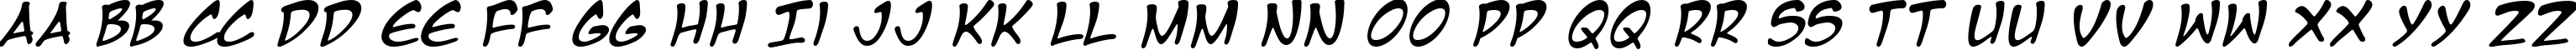 Пример написания английского алфавита шрифтом Manga Temple Italic